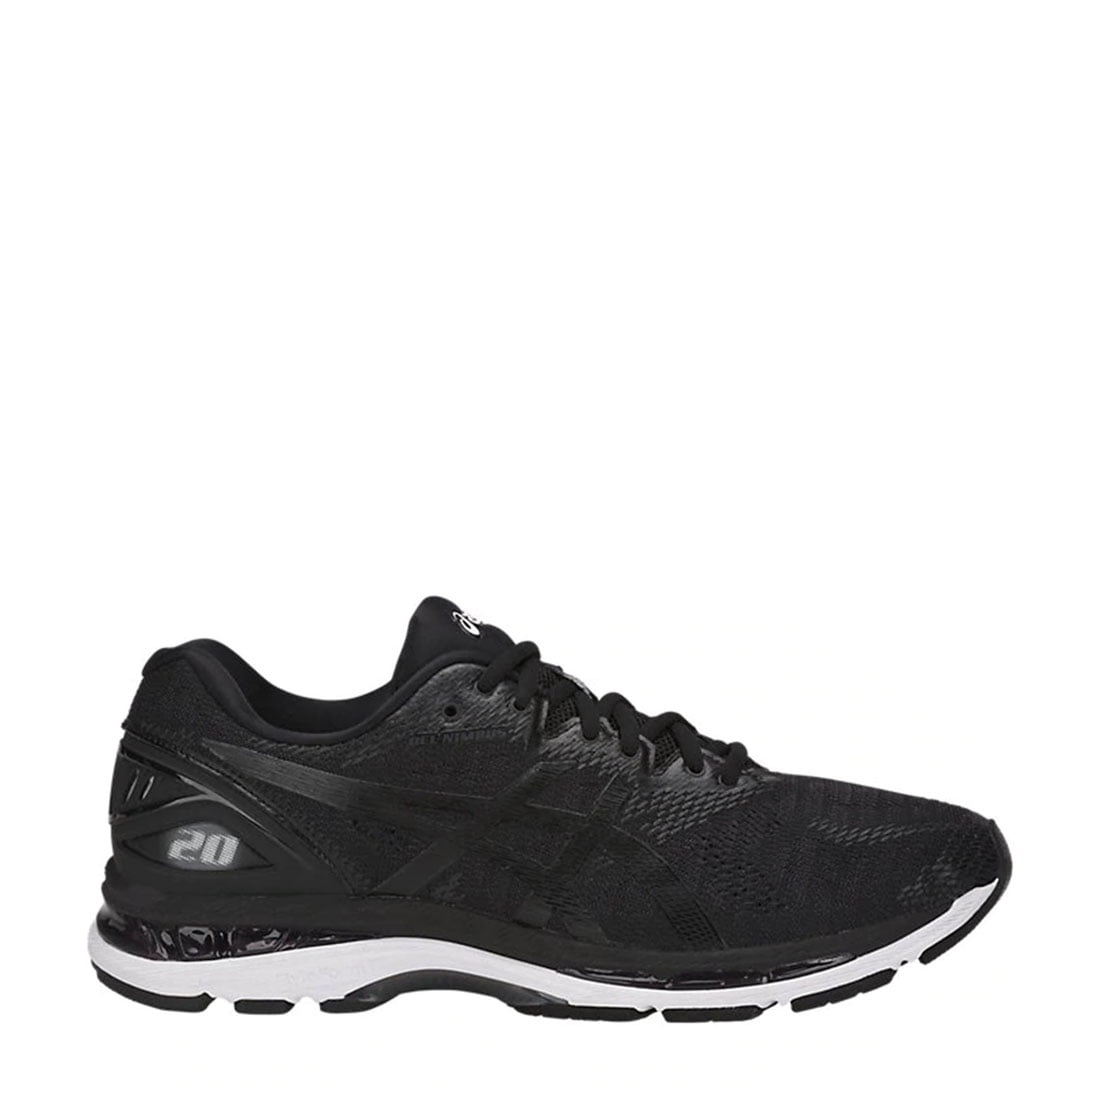 Asics Gel Nimbus 20 2E Men/Adult shoe size 8.5 EW Extra Casual T8O1N-9001 Black/White/Carbon - Walmart.com